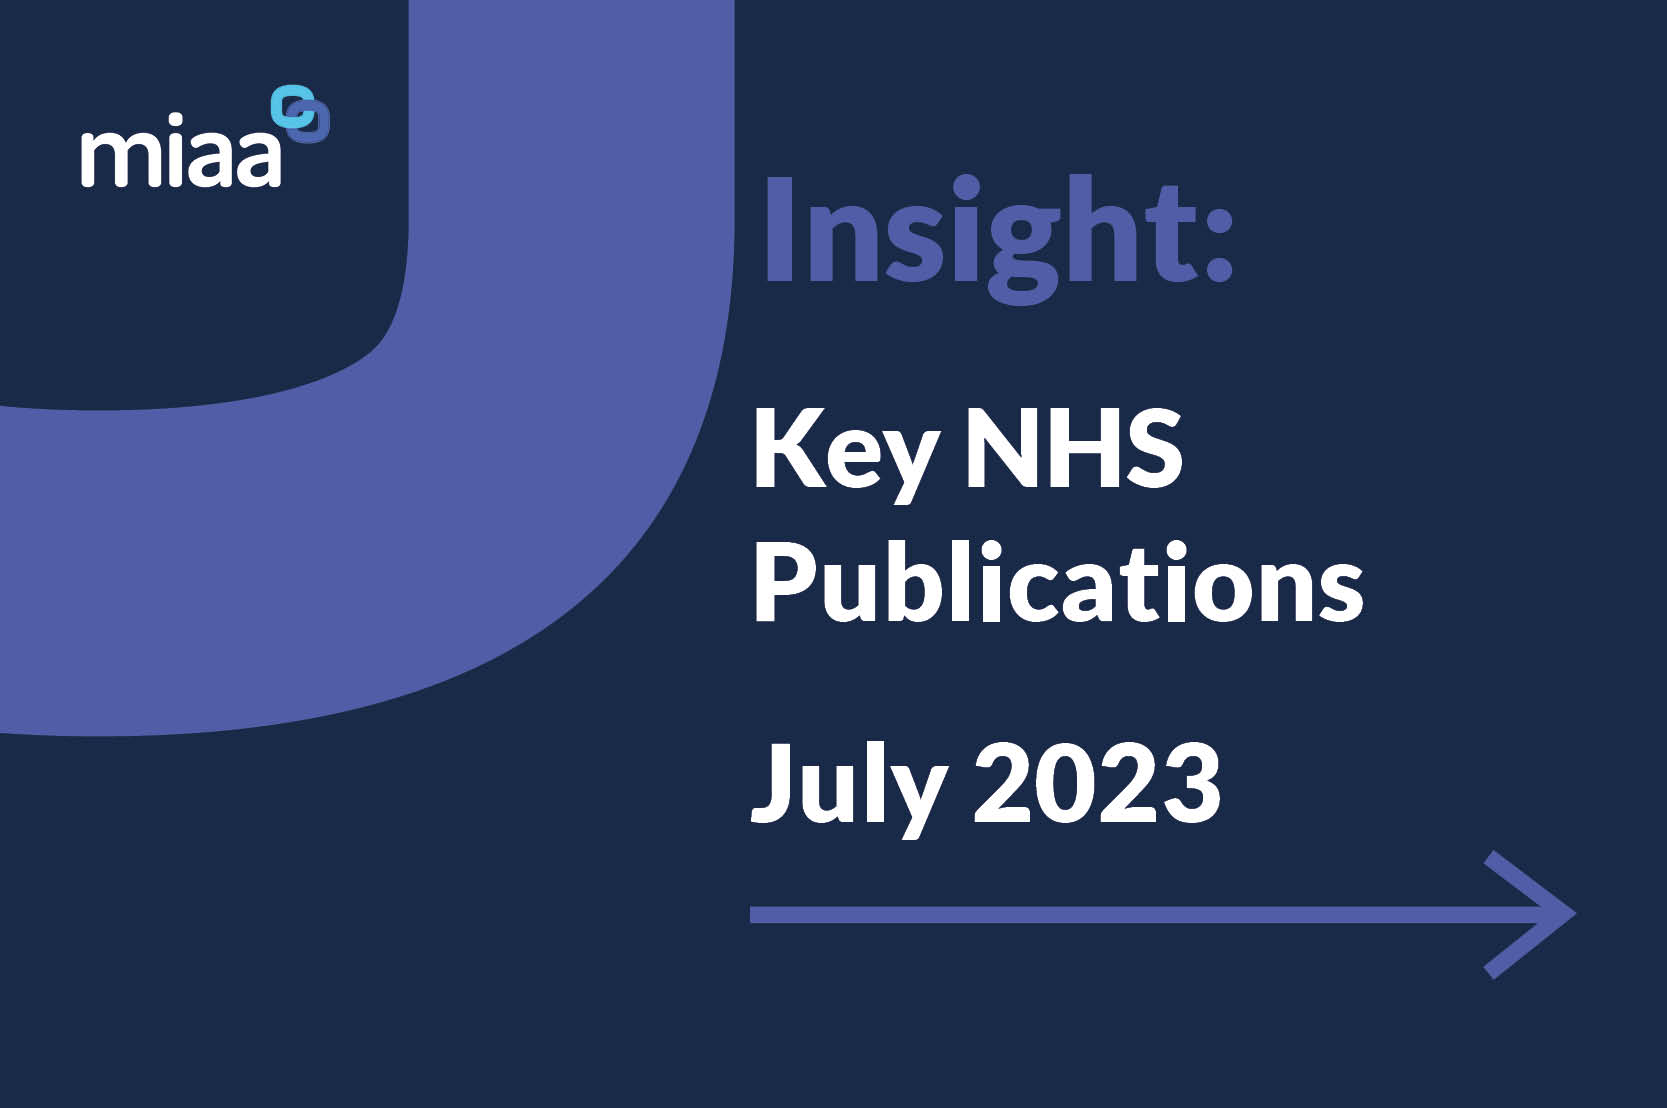 NHS Key Publications - July 2023